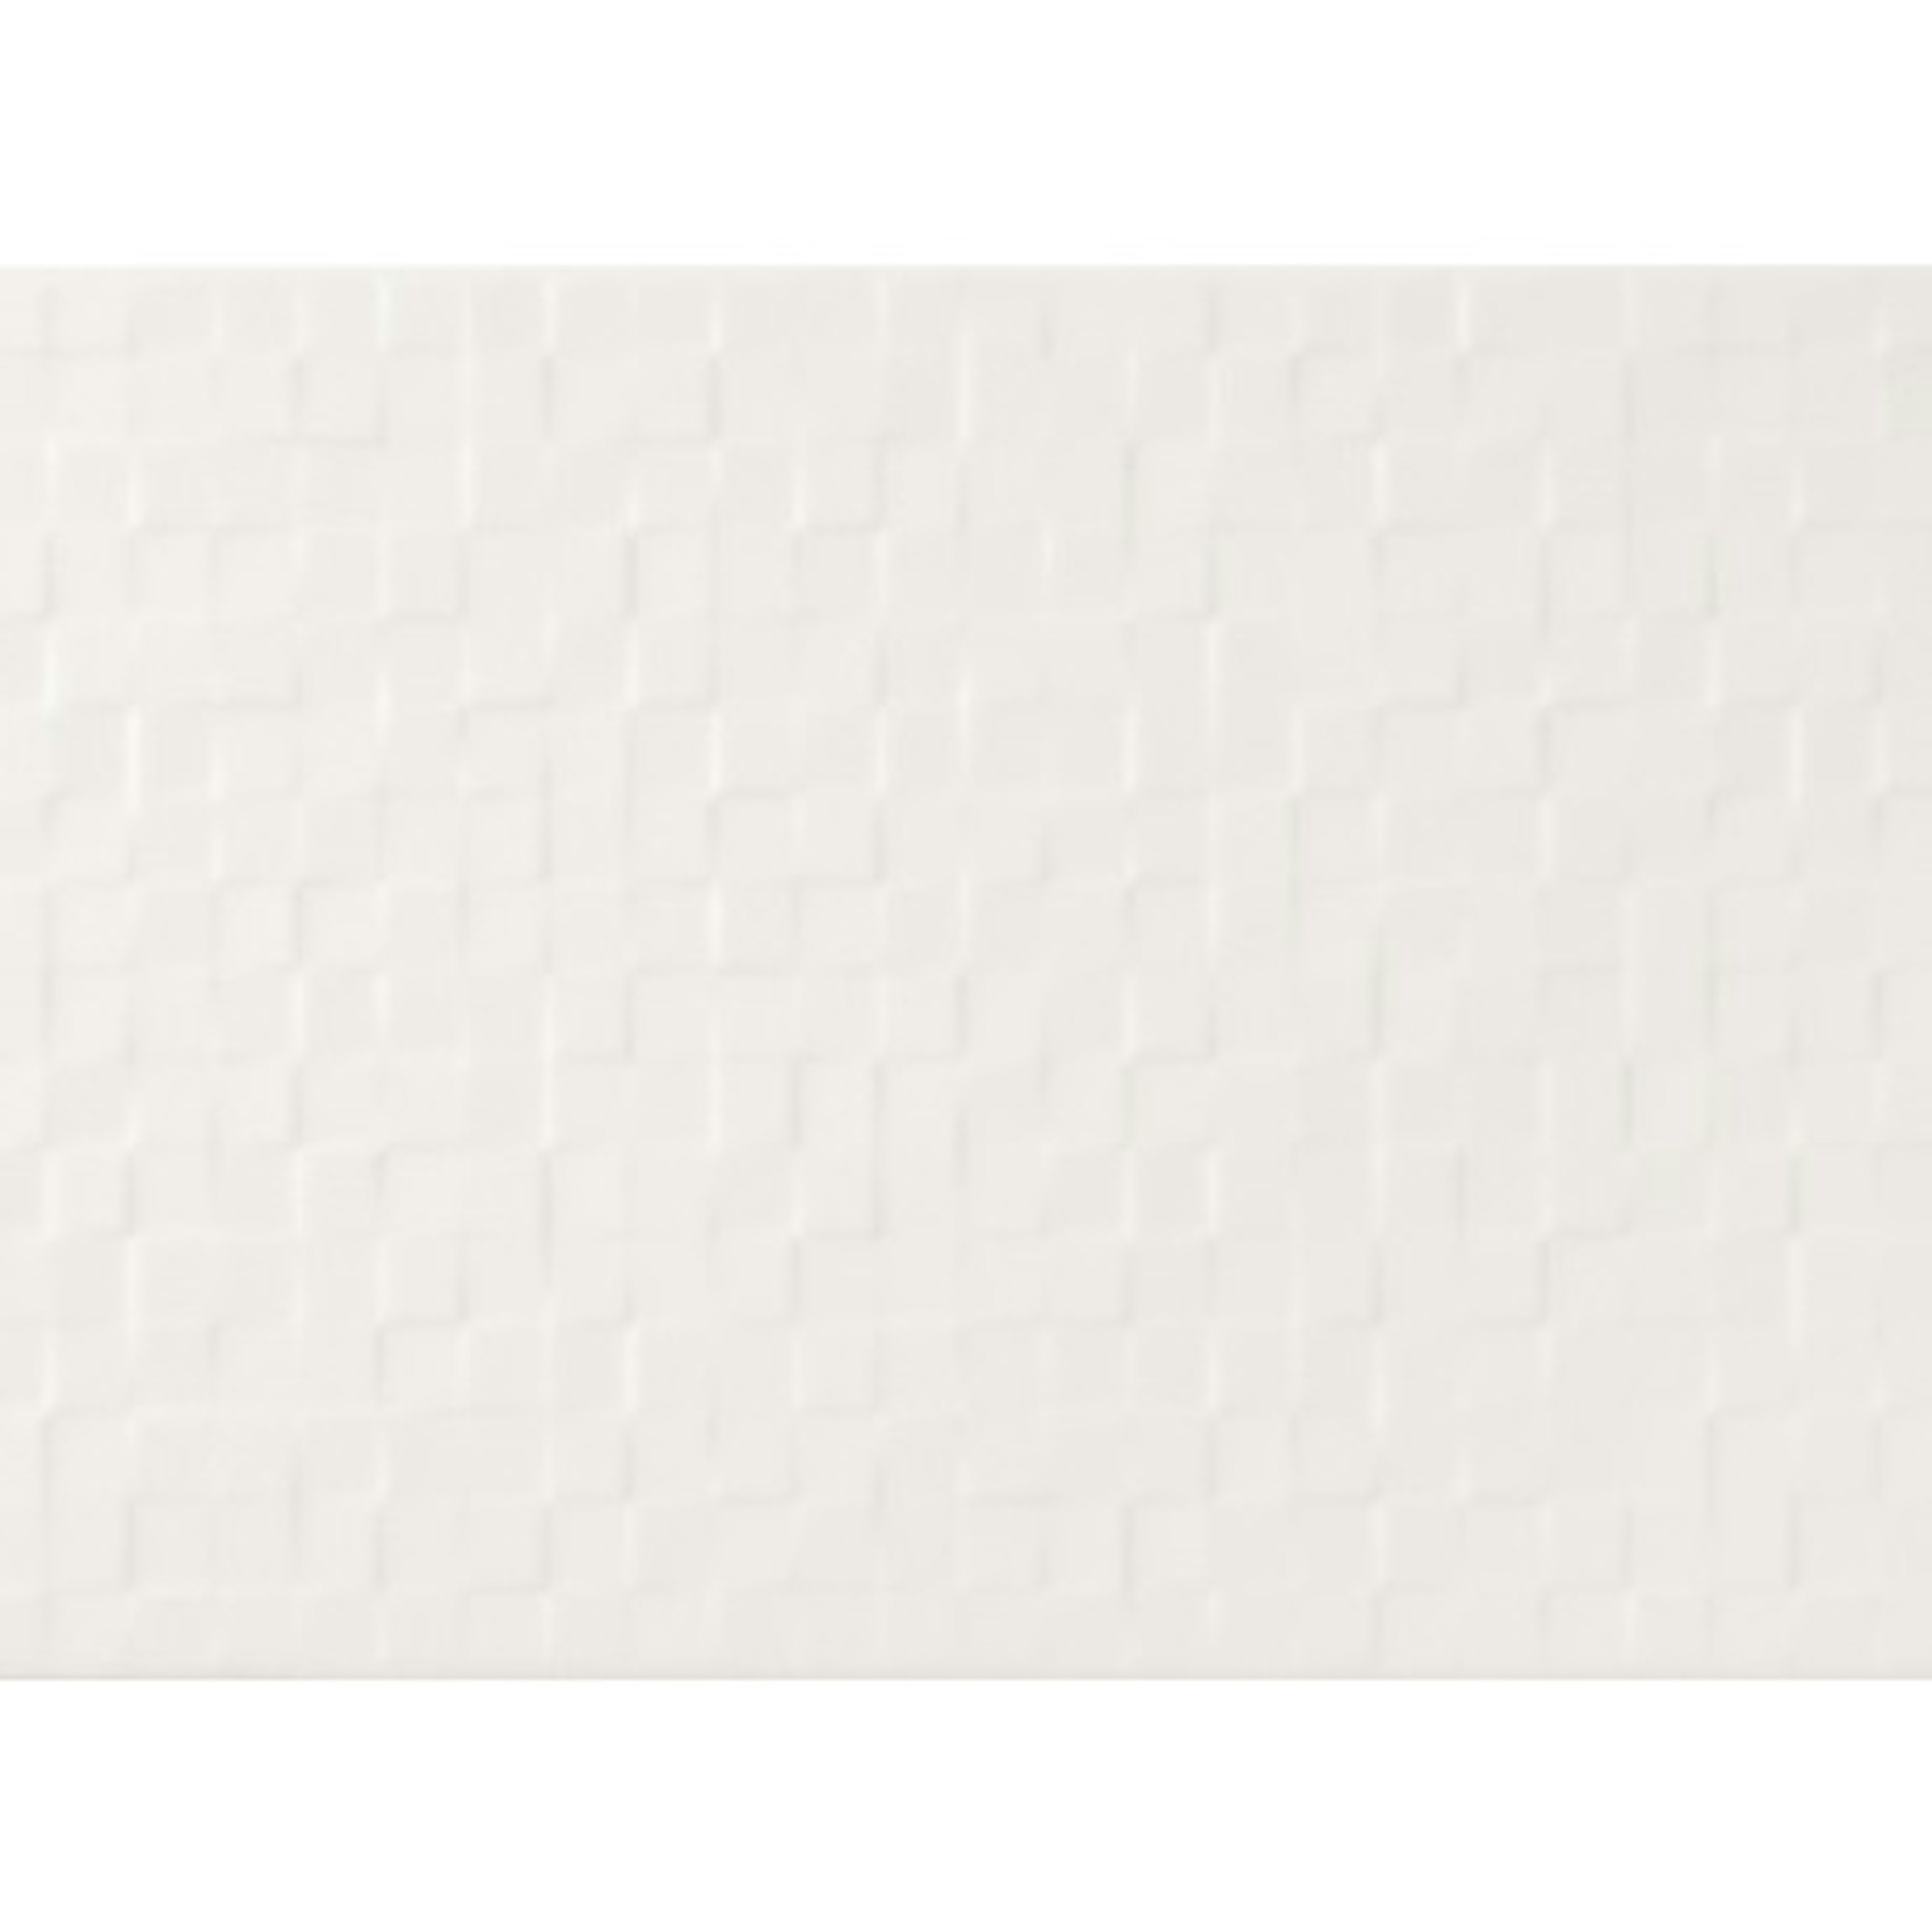 Feel White Kubik Textured Wall Tile Clearance